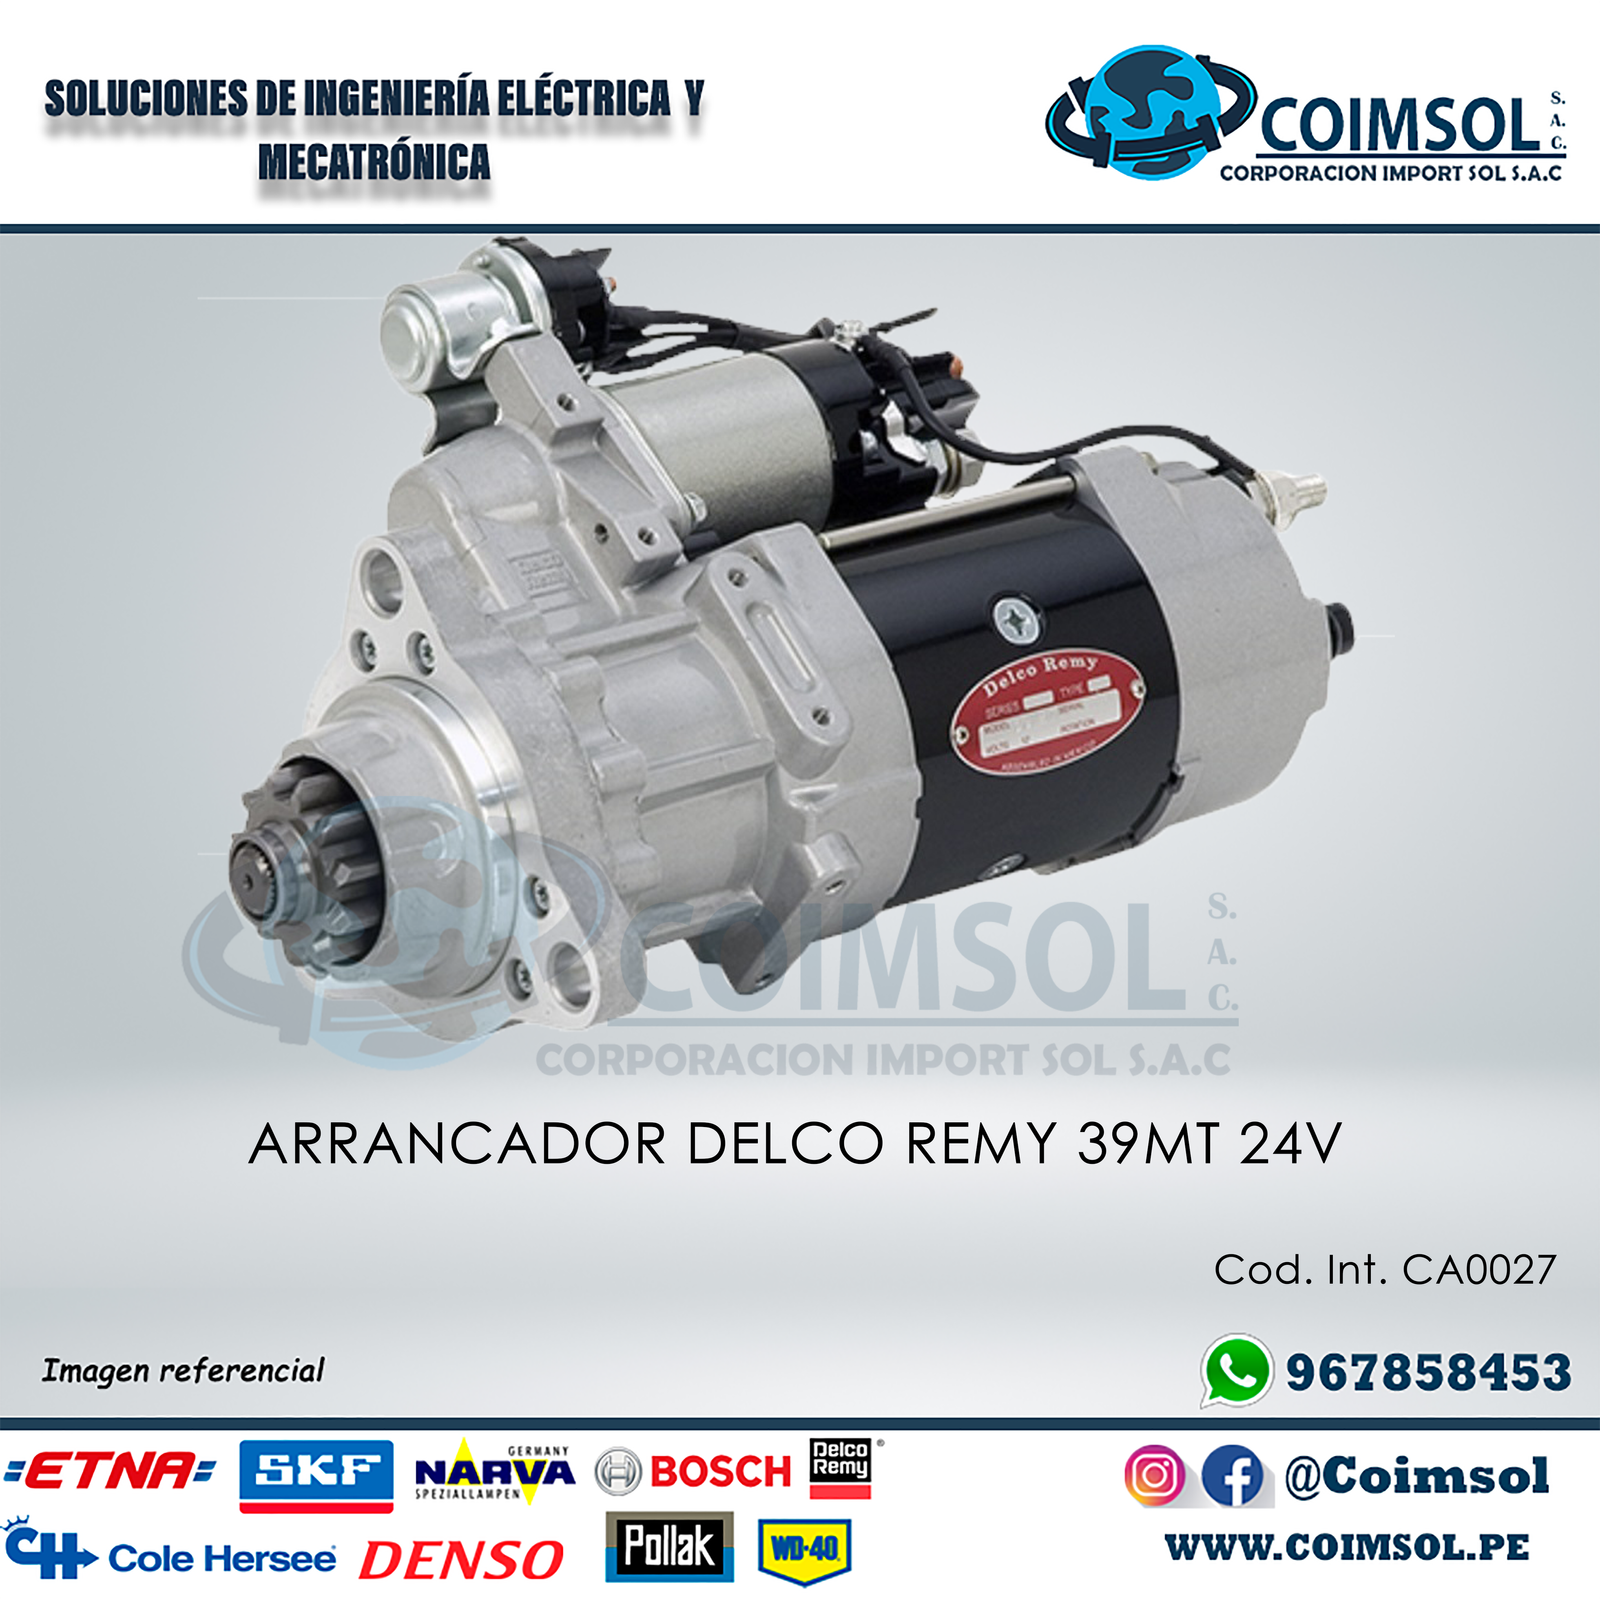 ARRANCADOR DELCO REMY 39MT – 24V - CORPORACION IMPORT SOL